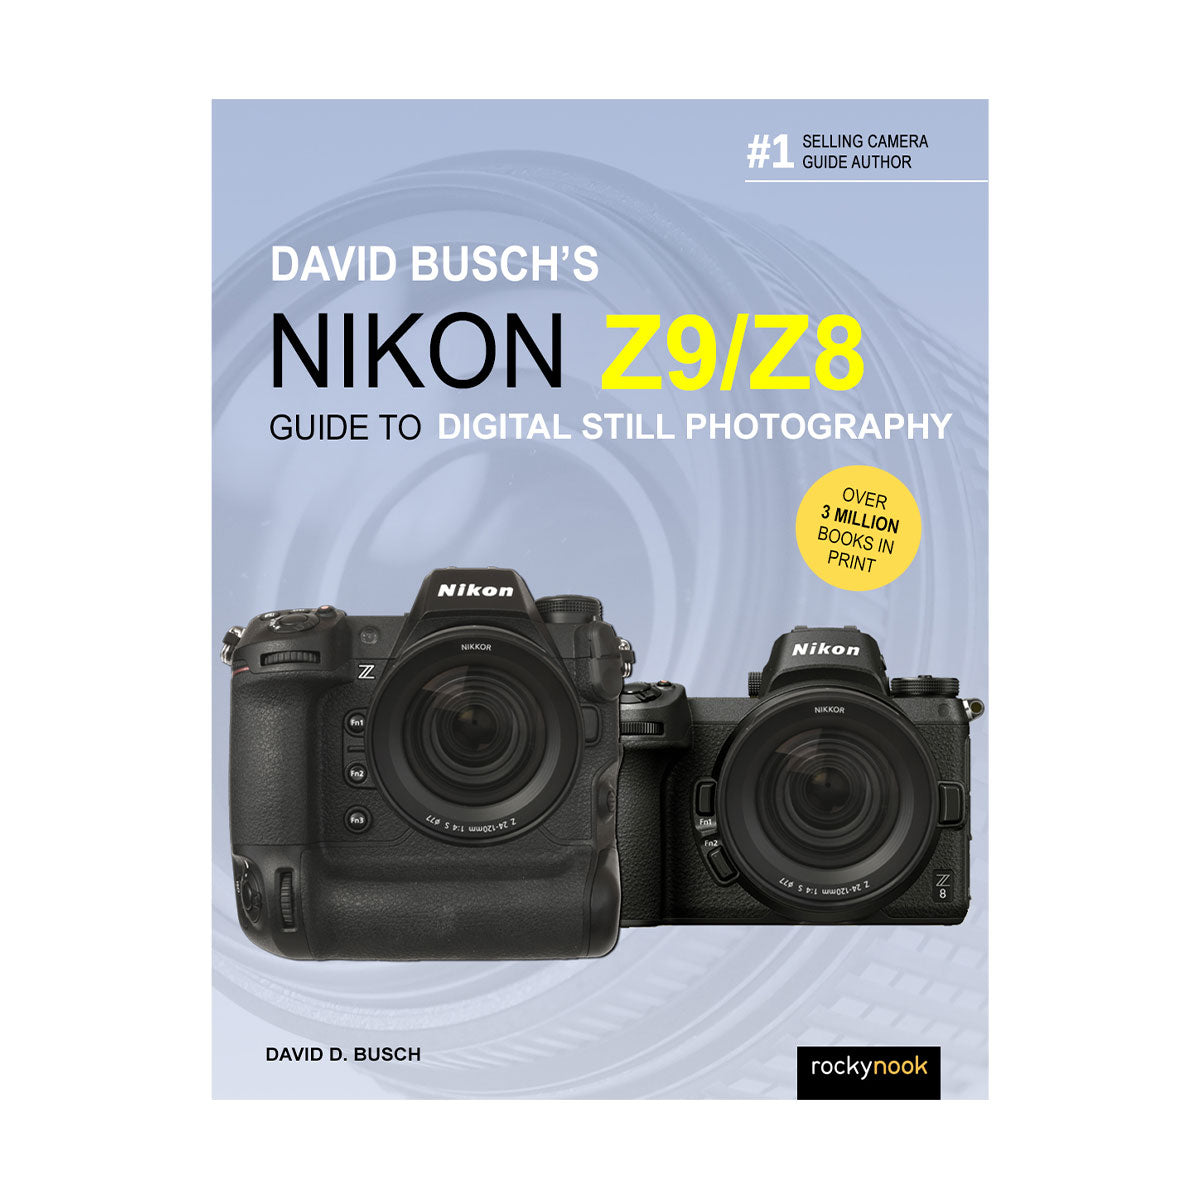 David Busch’s Nikon Z9/Z8 Guide to Digital Still Photography Book